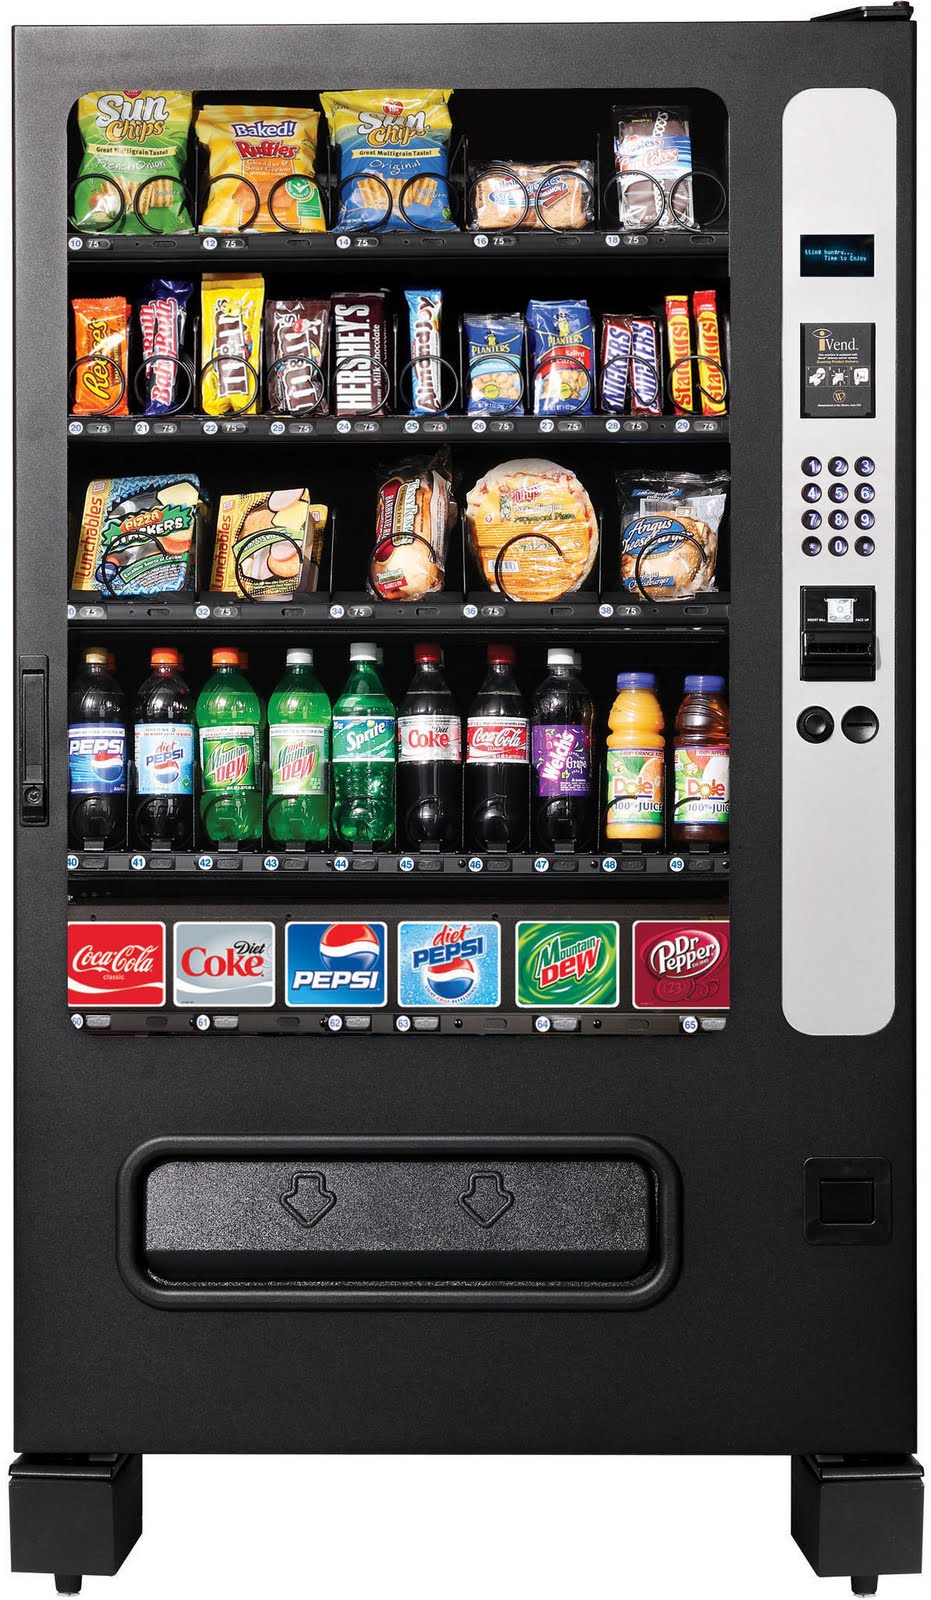 Loose Change: Moody Vending Machines